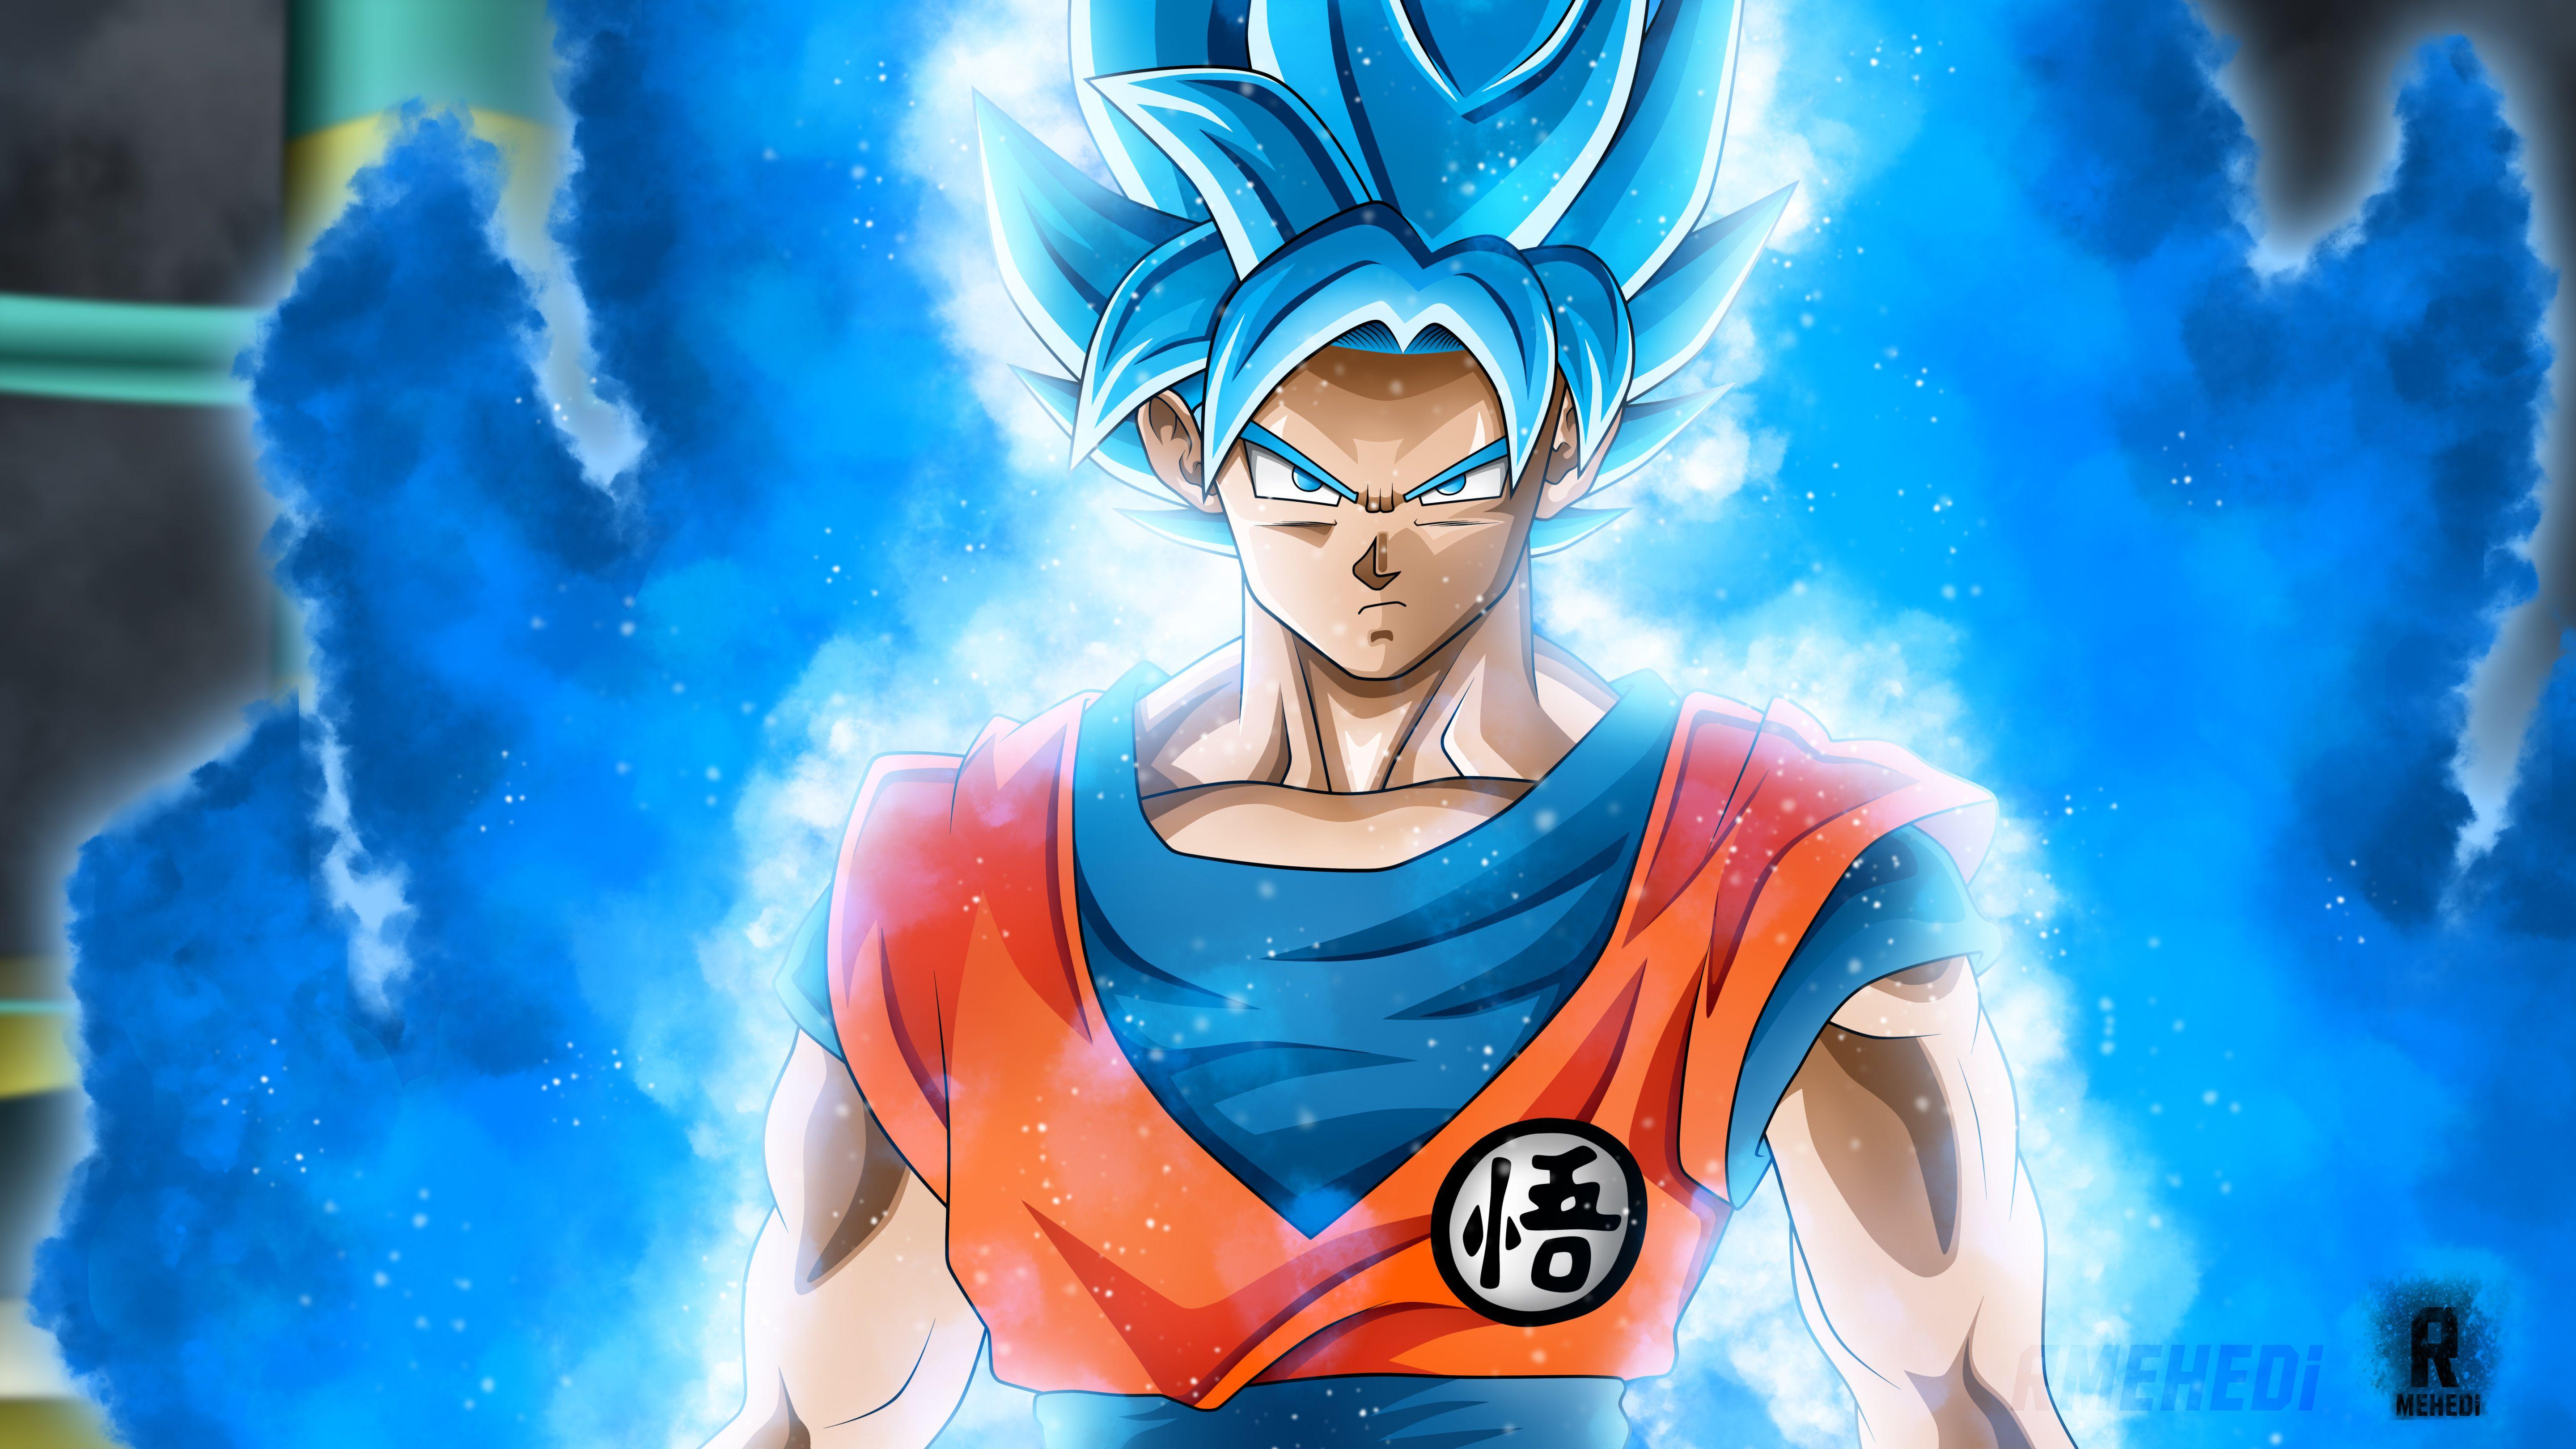 Goku Wallpaper Free Goku Background